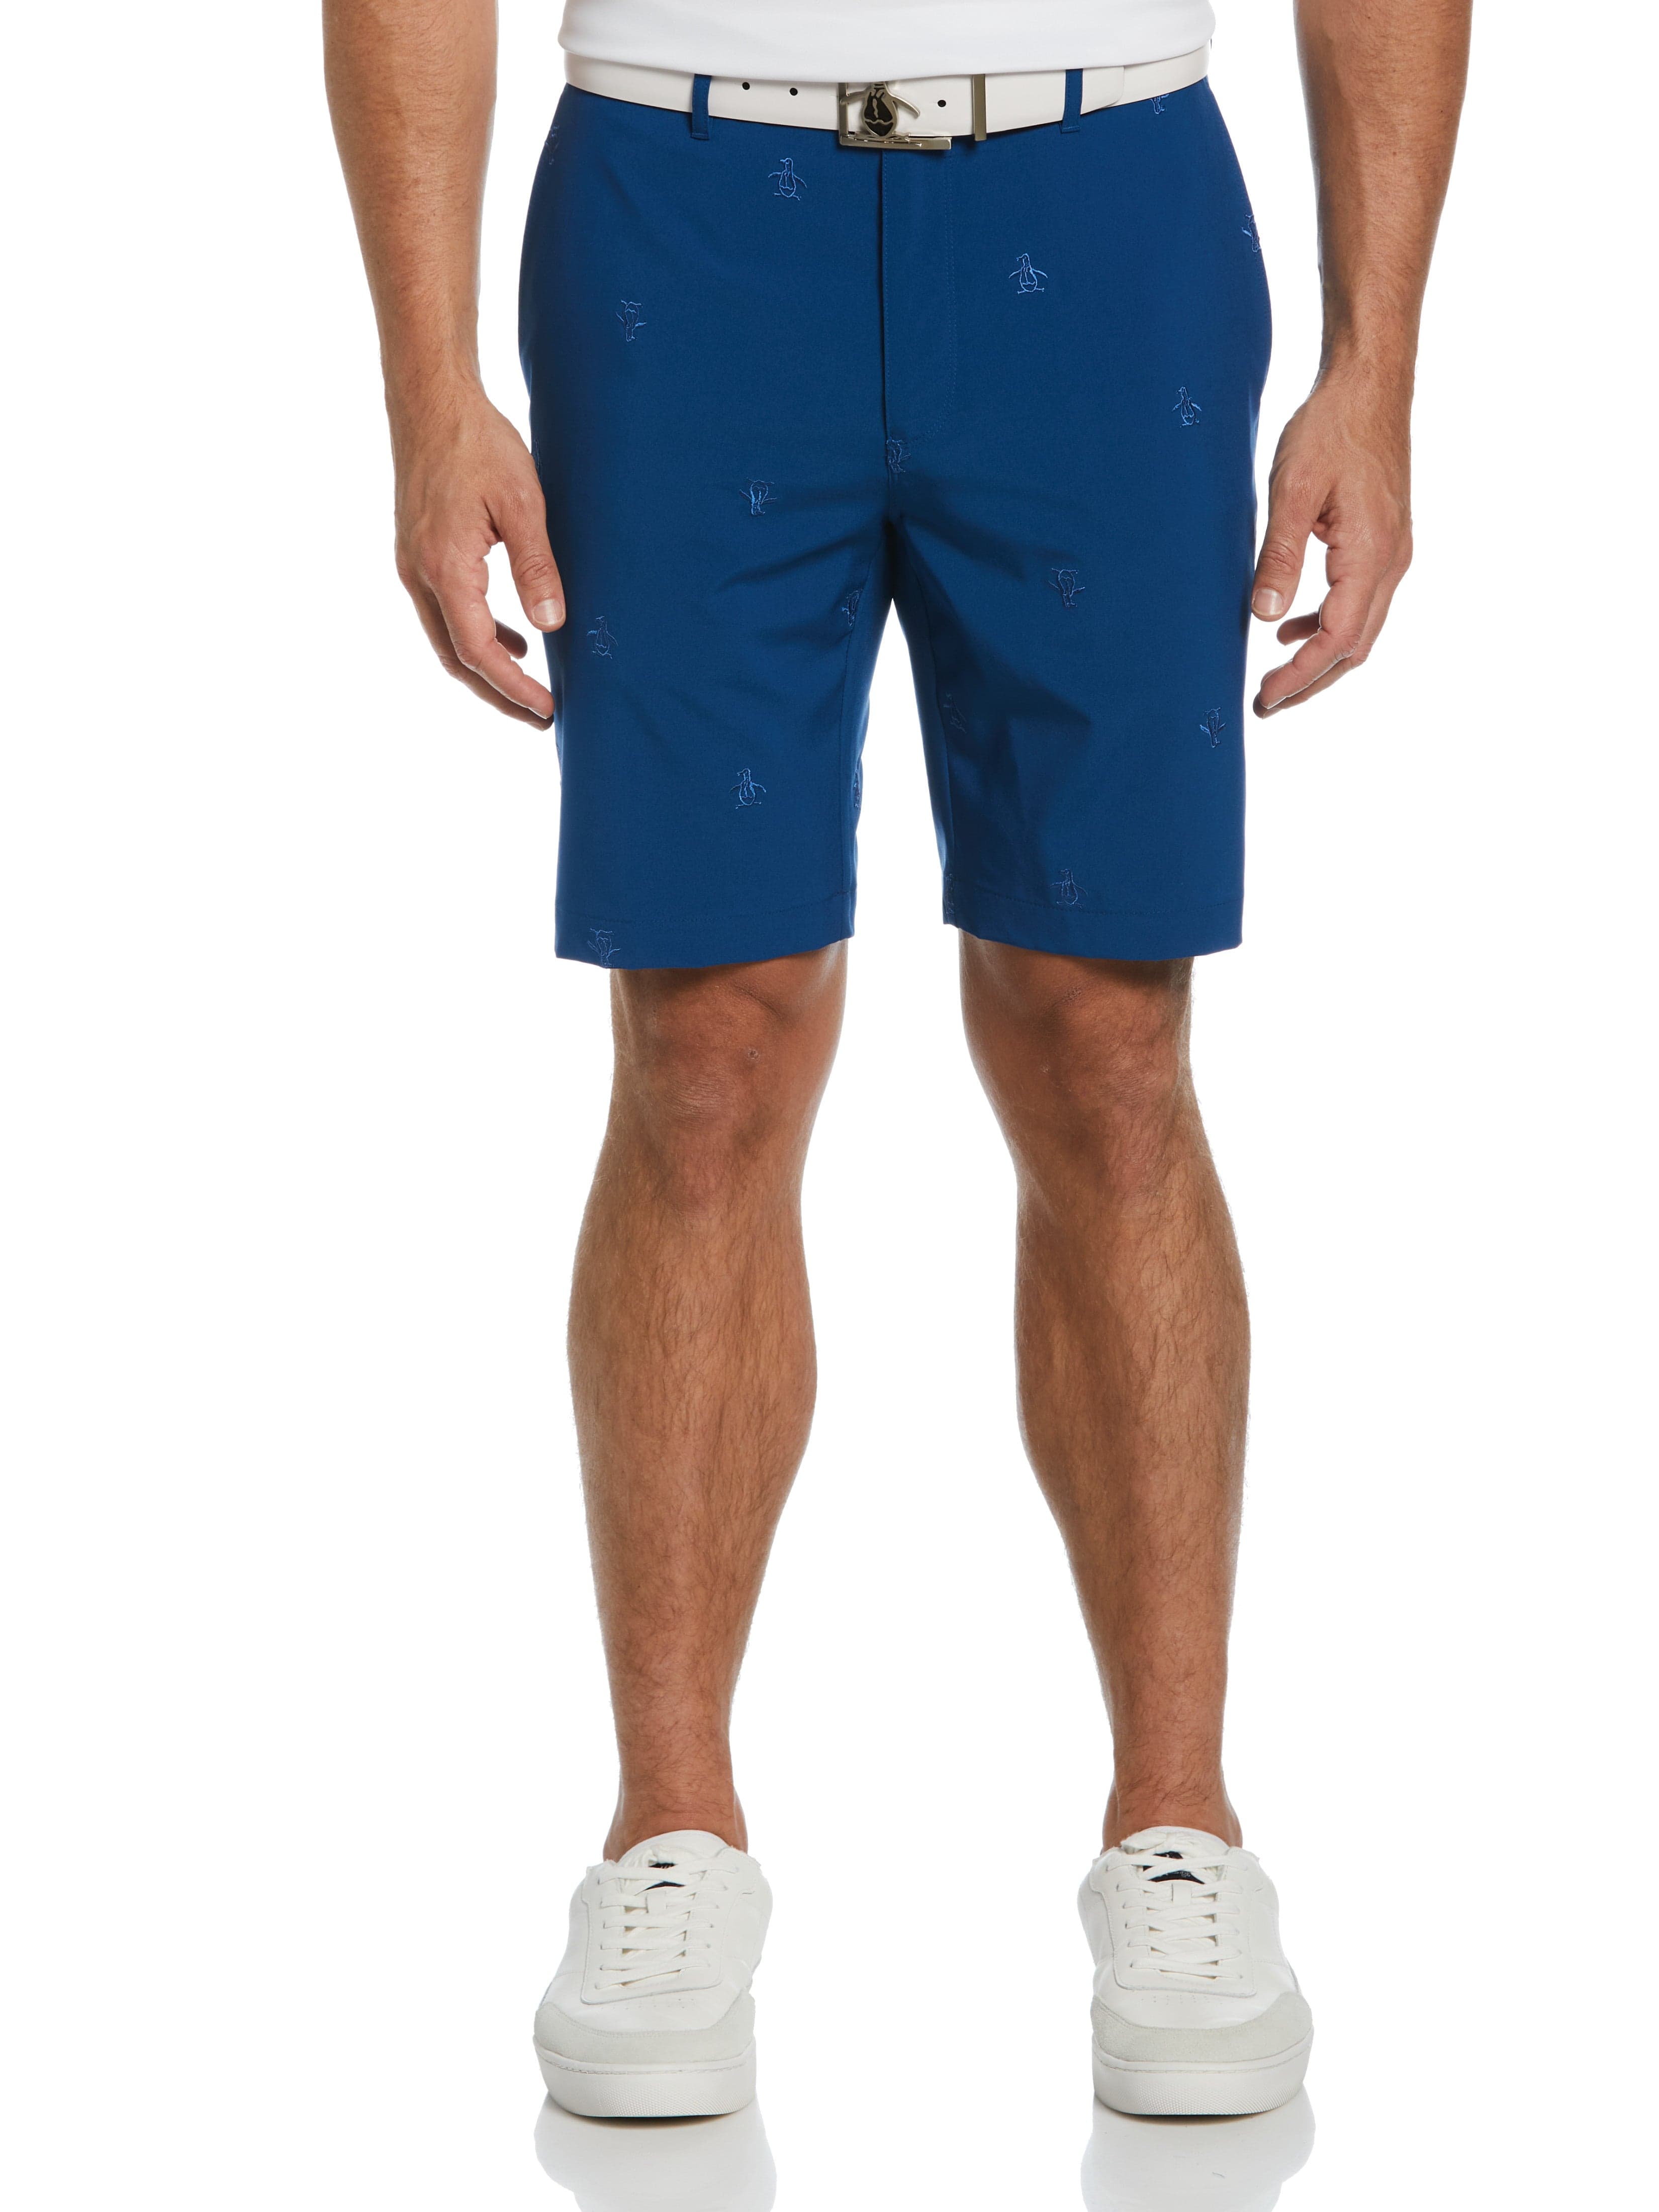 Original Penguin Mens Allover Pete Embroidered Golf Shorts, Size 28, Blueberry Pancake, Polyester/Spandex | Golf Apparel Shop